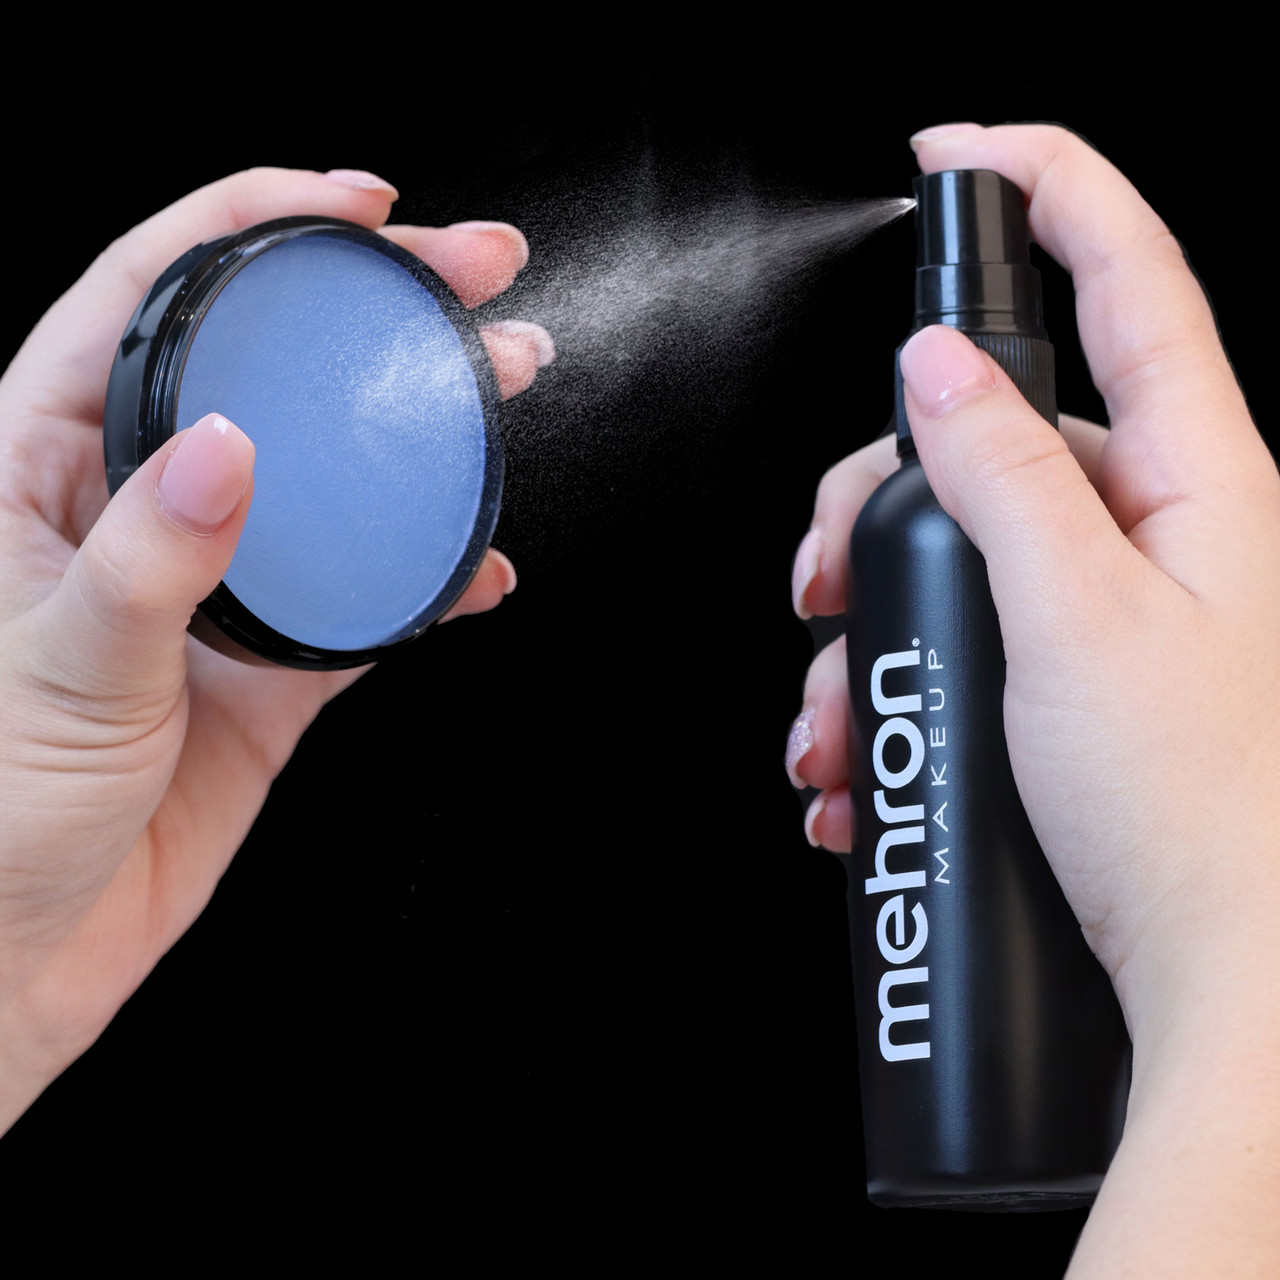 Mehron Barrier Spray Refill - 9oz. by MWS Pro Beauty